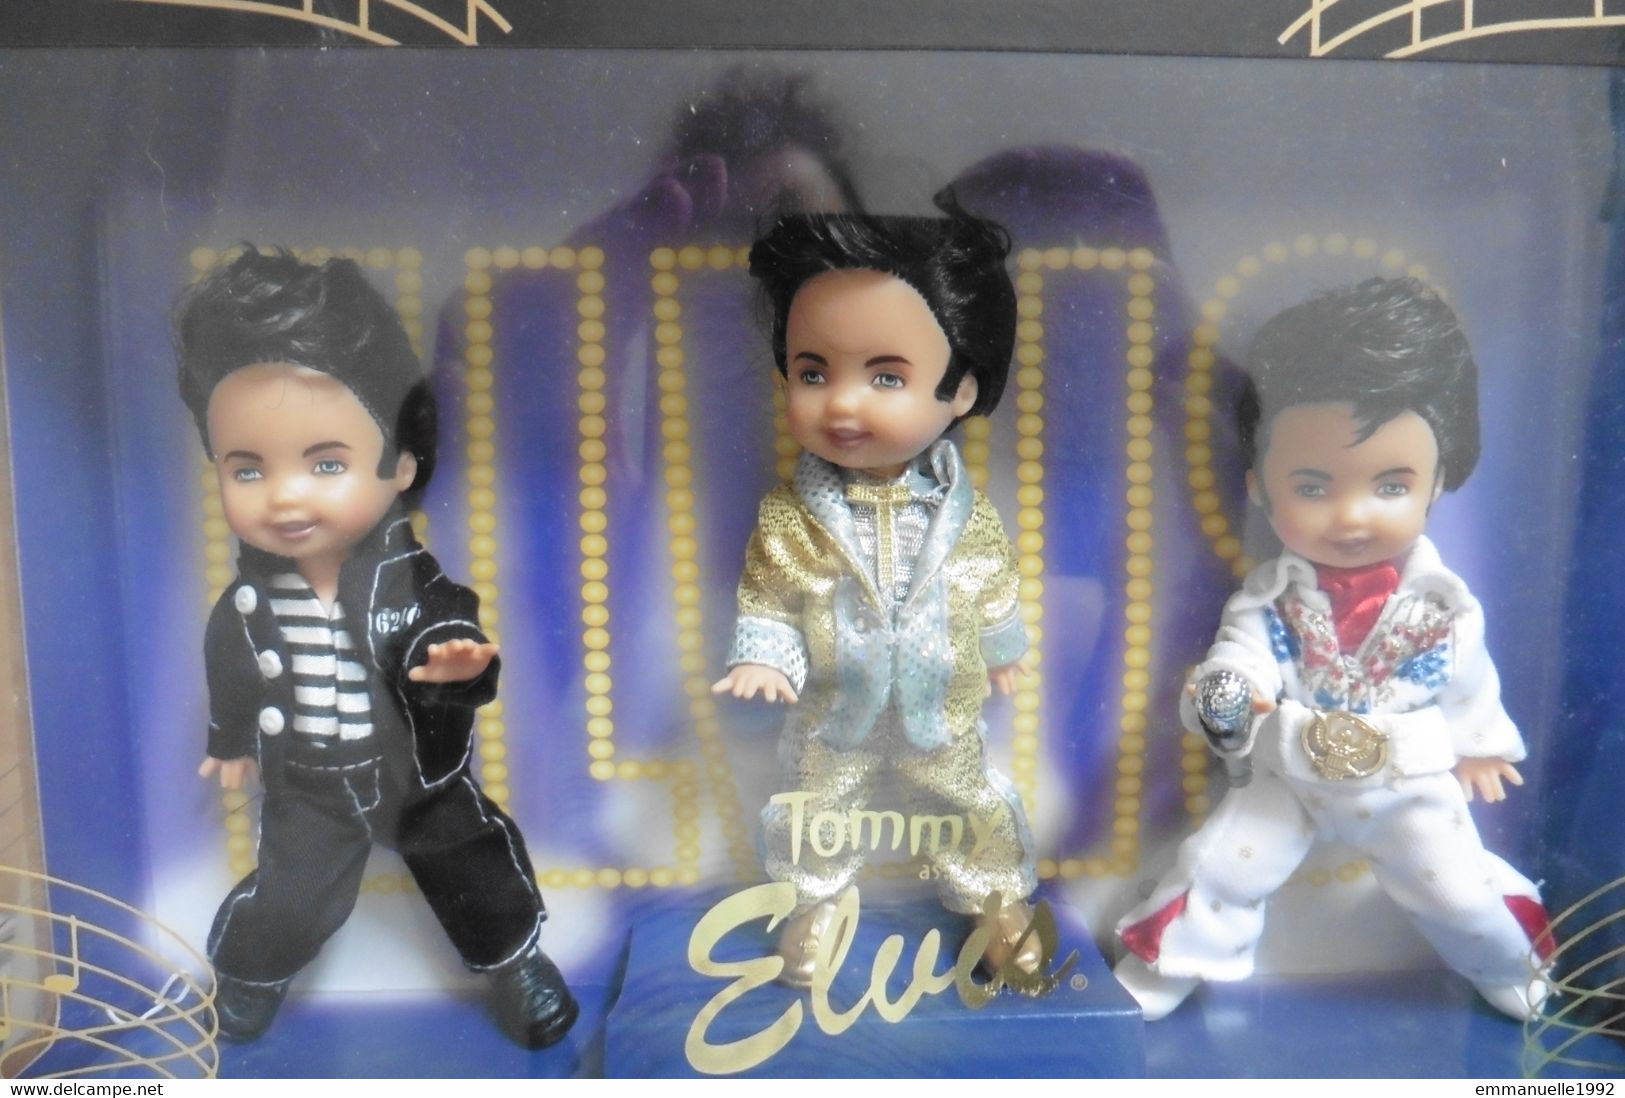 Tommy as Elvis Presley 3 Doll Collector Edition Barbie Mattel 2003 for sale online 